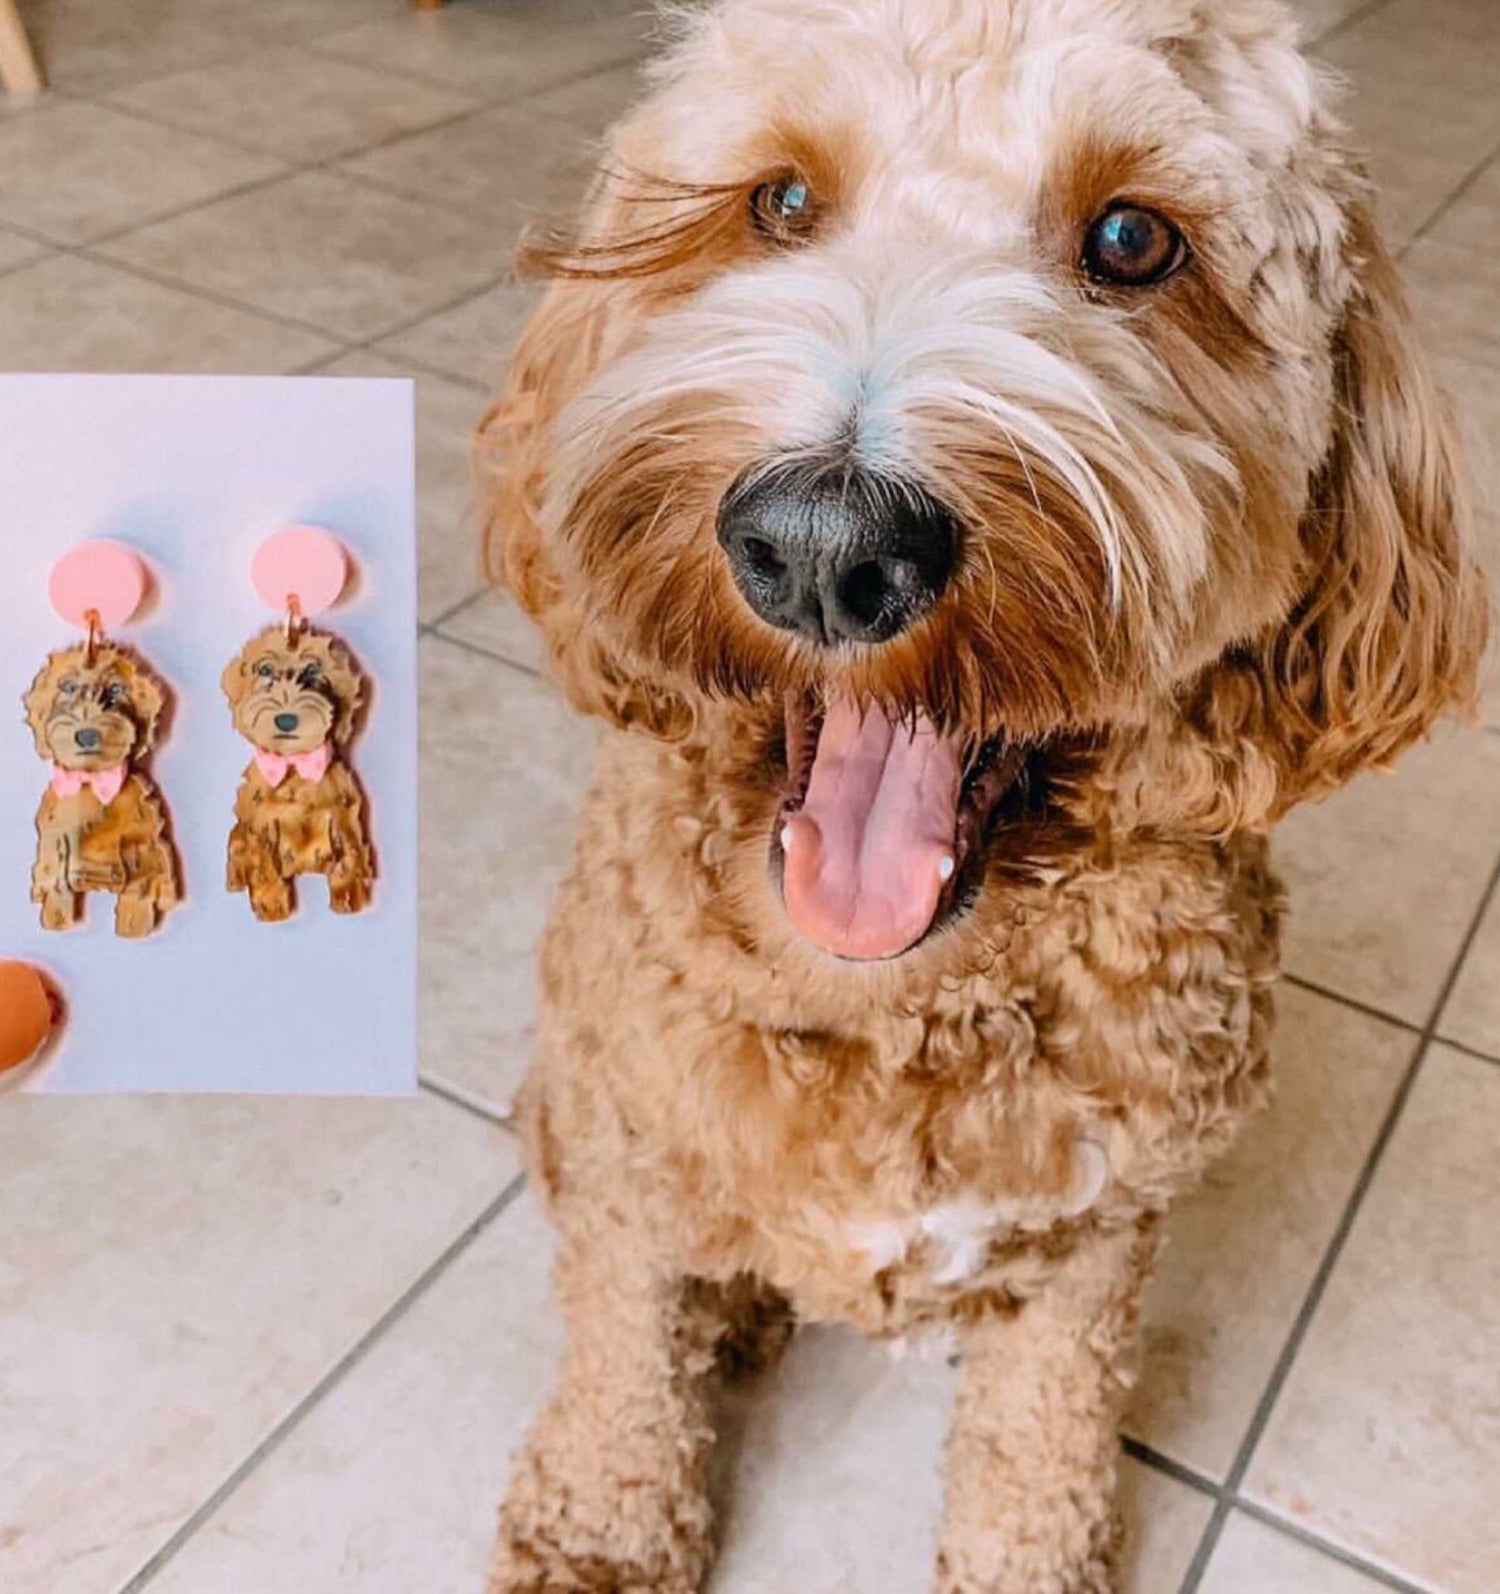 Acrylic dog earrings next to actual dog